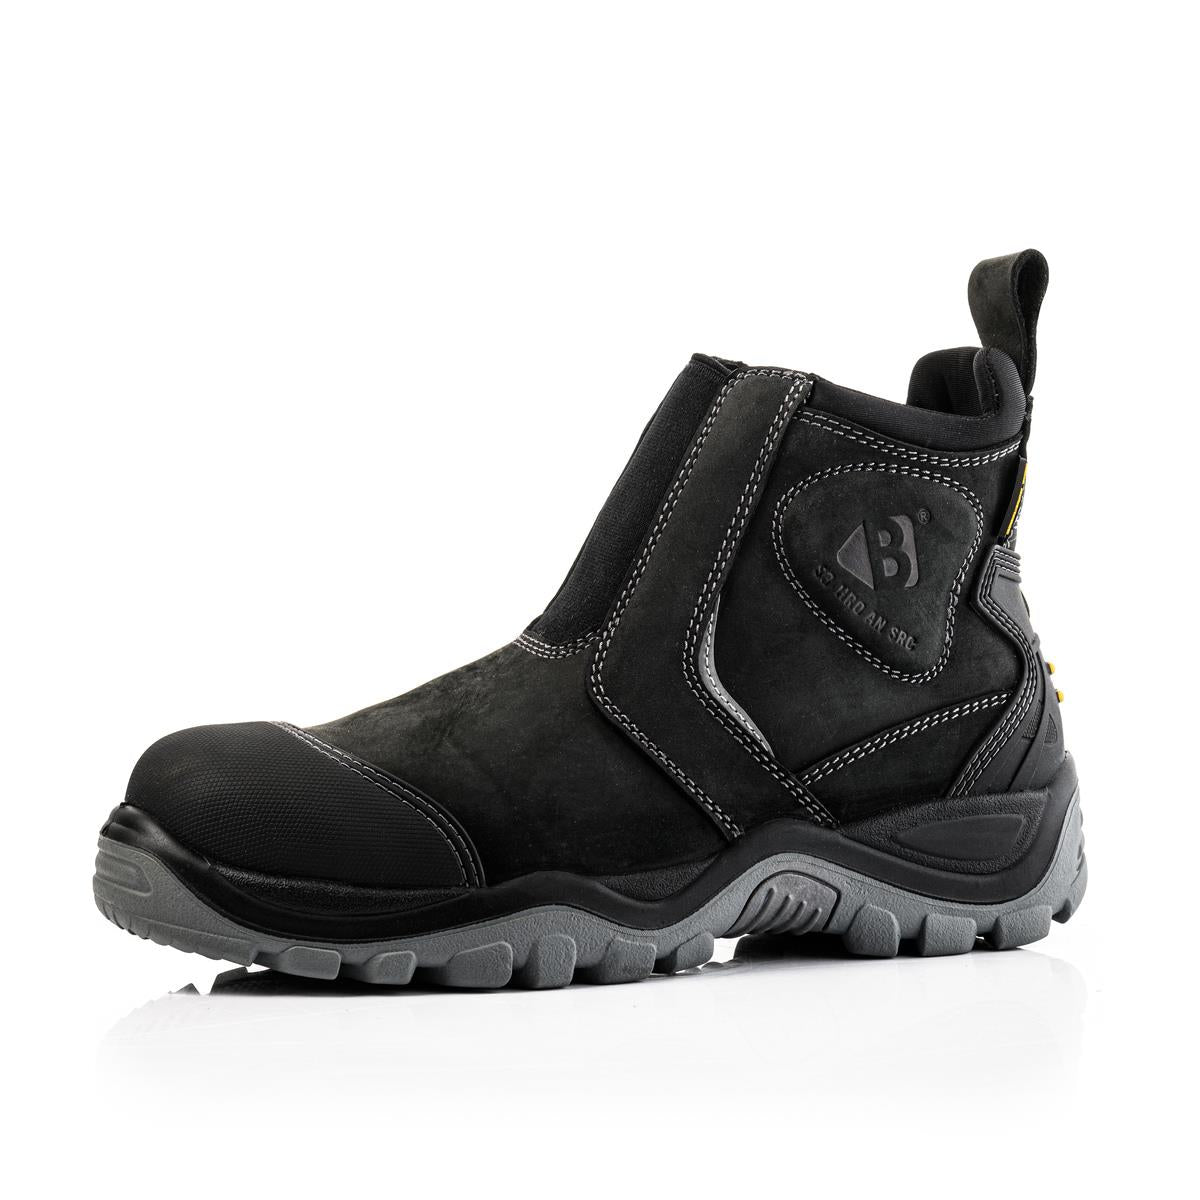 Buckbootz S3 black ankle protection waterproof composite toe/midsole work safety dealer boot #BSH014